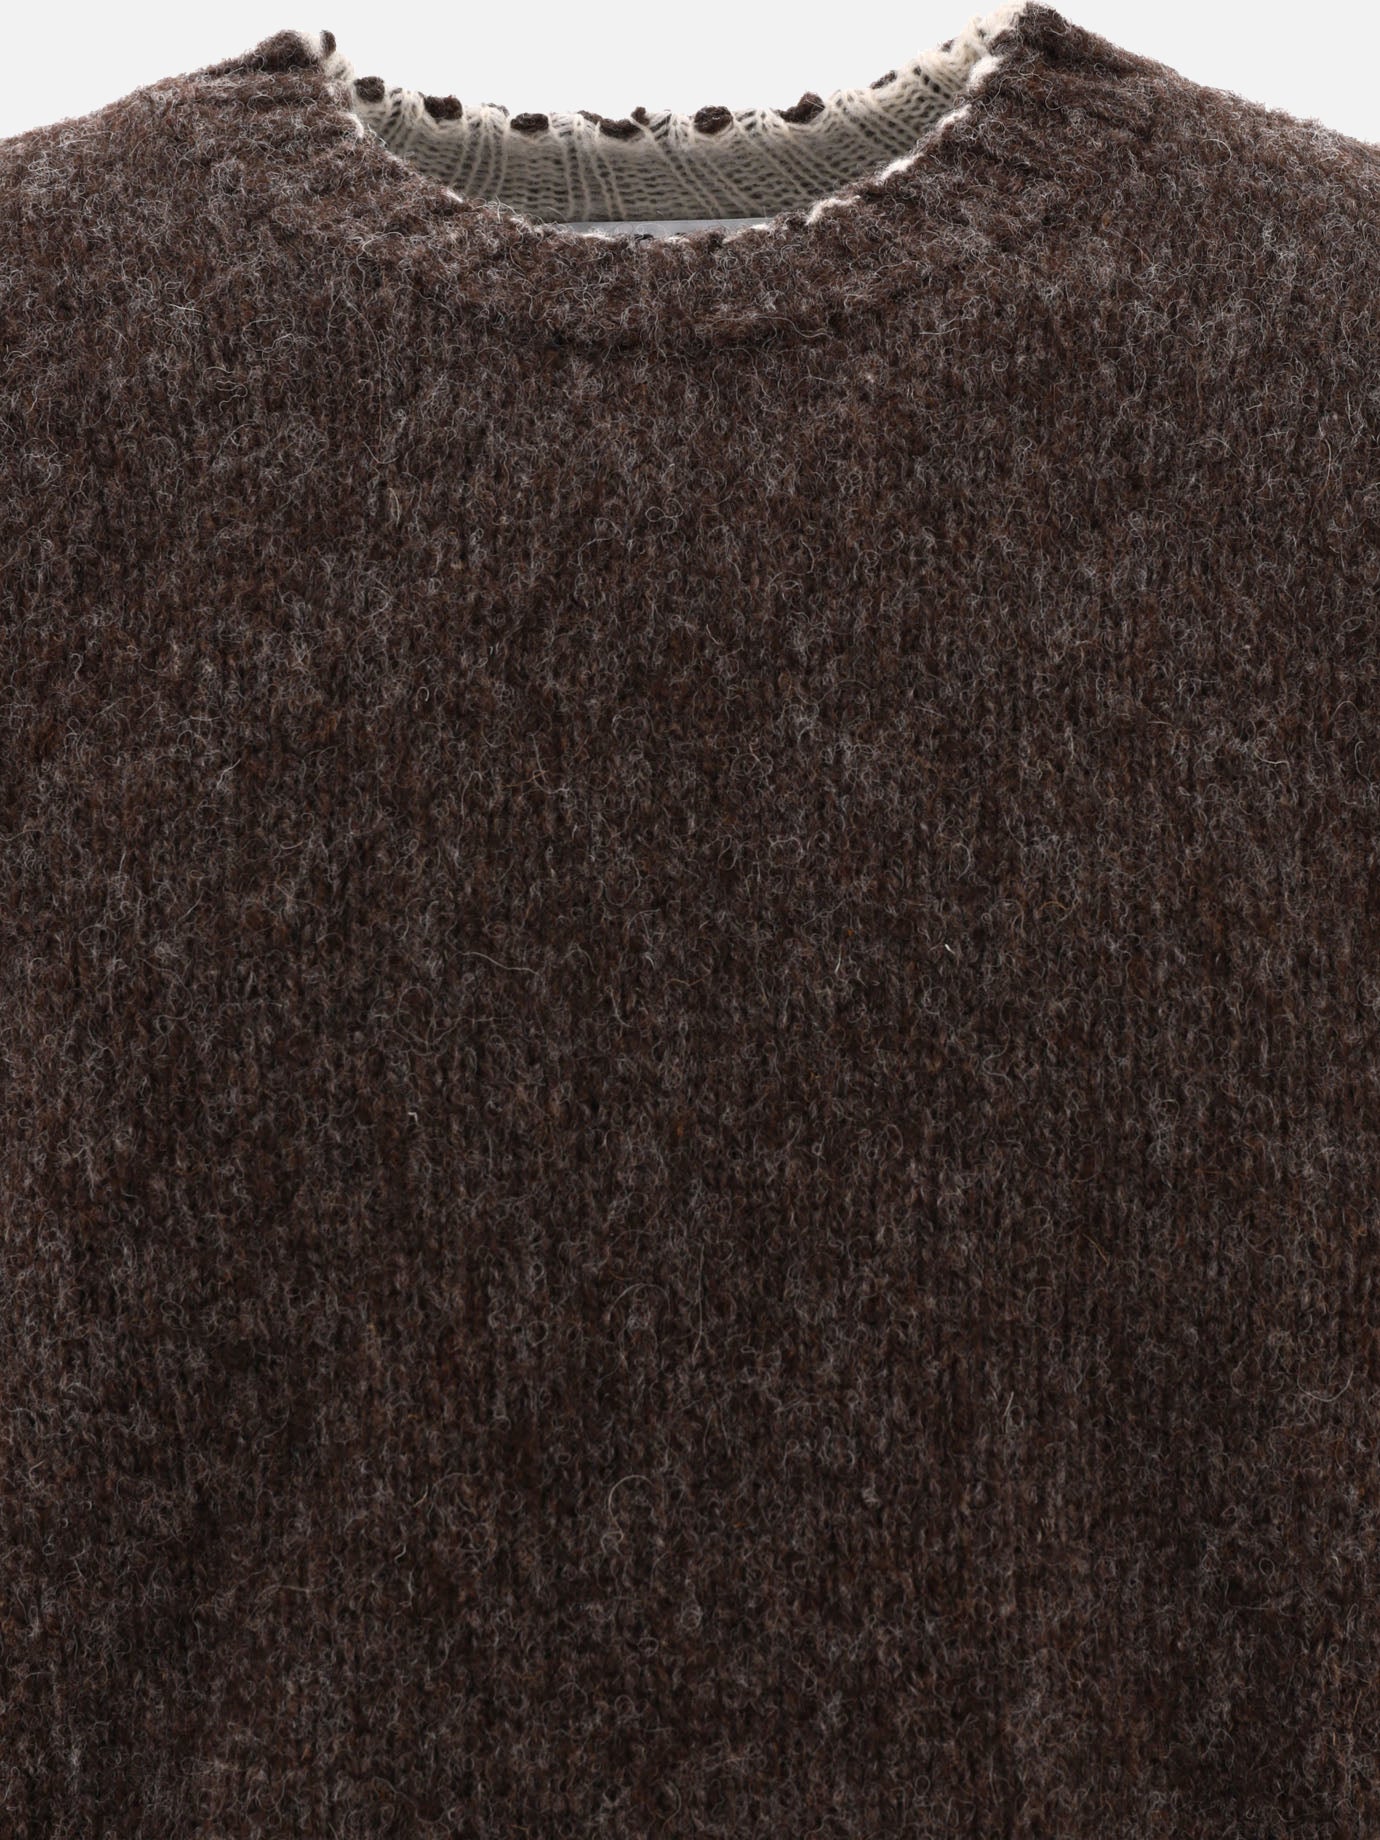 "Ange APC x JW Anderson" sweater